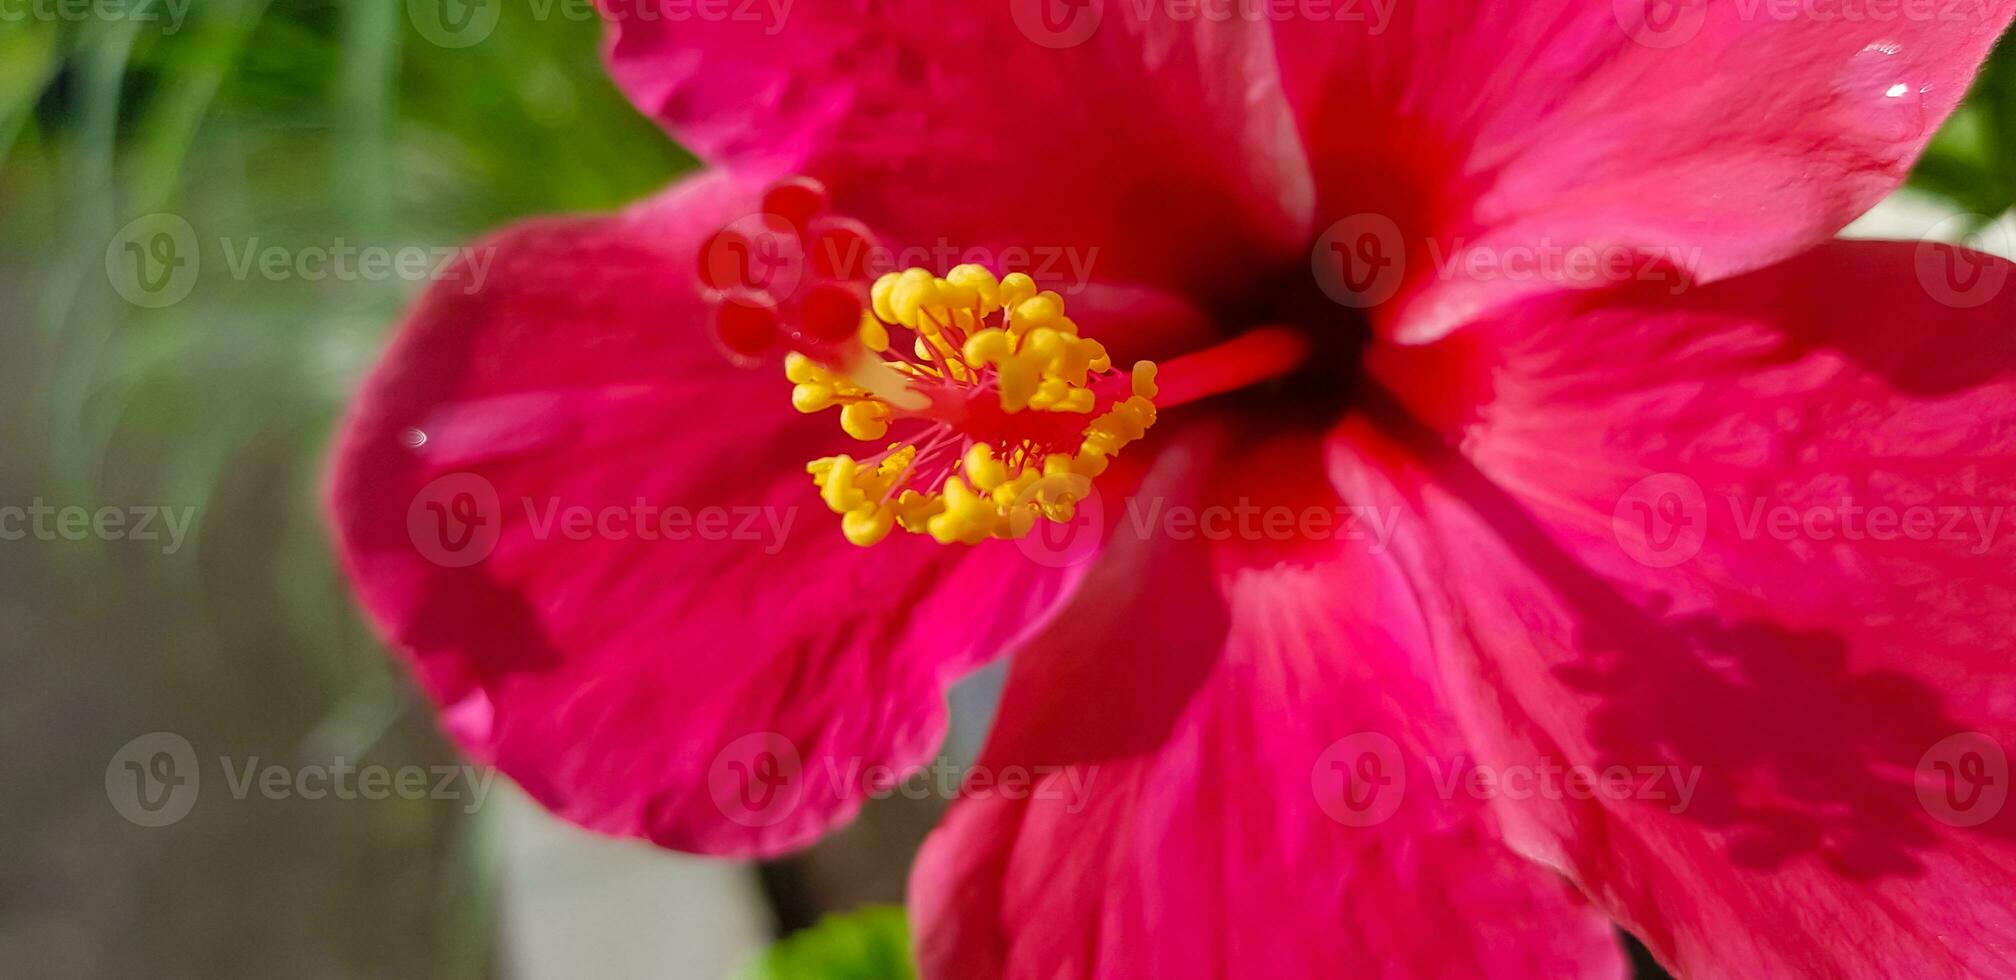 magnifique proche en haut de rose fleur rose allamanda ou allamanda blanchetii une cc, ou apocynacées ou kembang sepatu photo